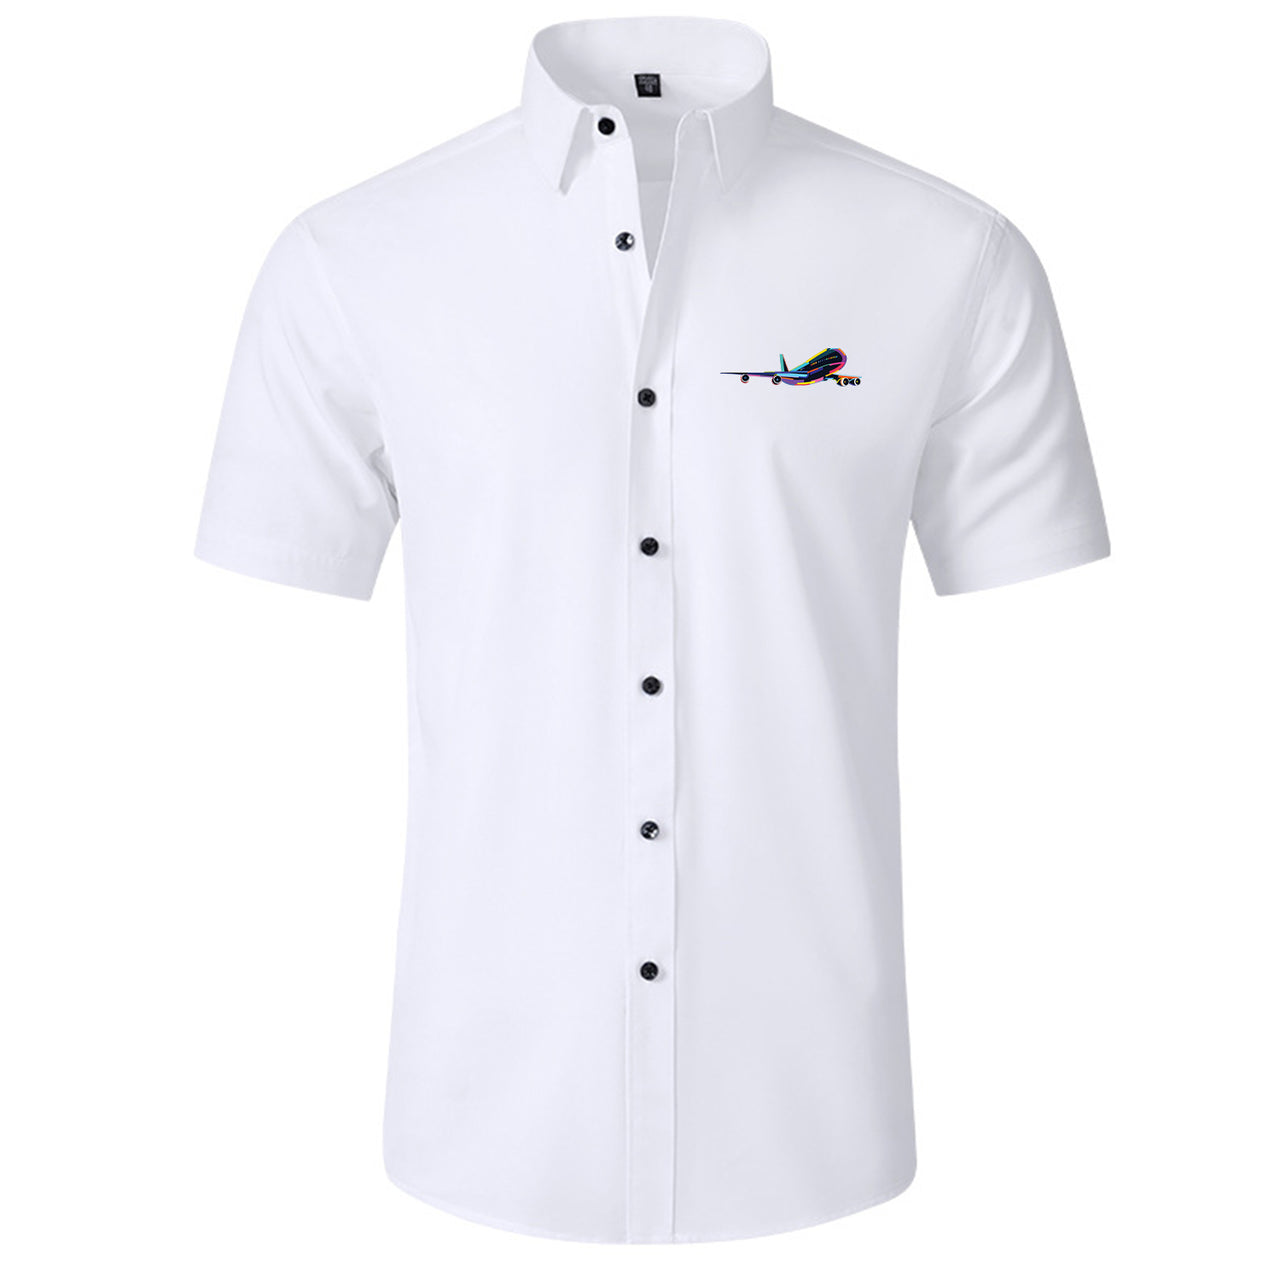 Multicolor Airplane Designed Short Sleeve Shirts